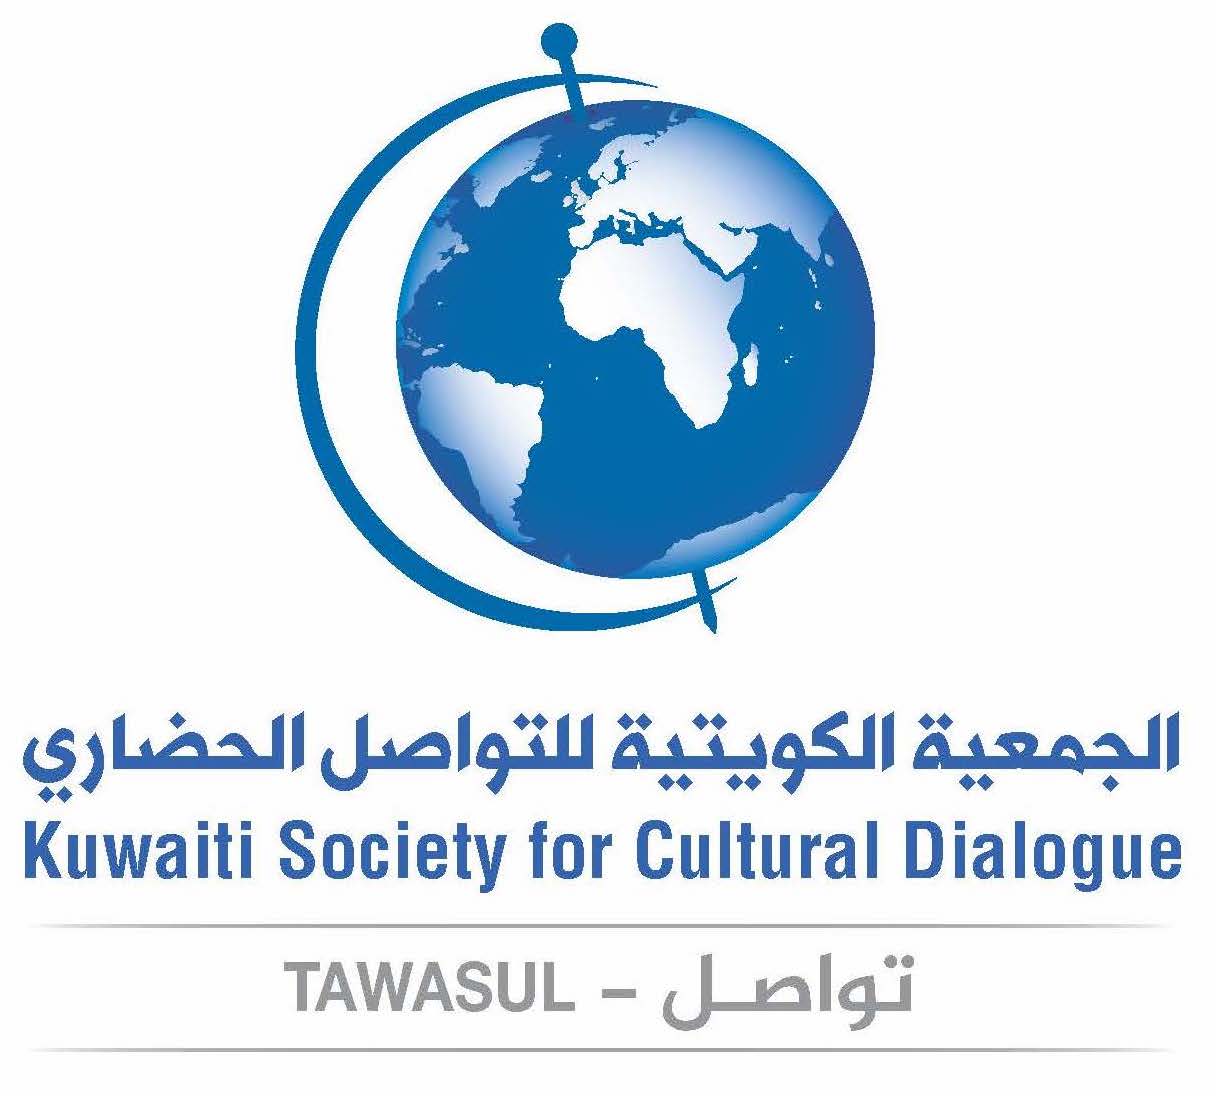 Kuwaiti Society for Cultural Dialogue